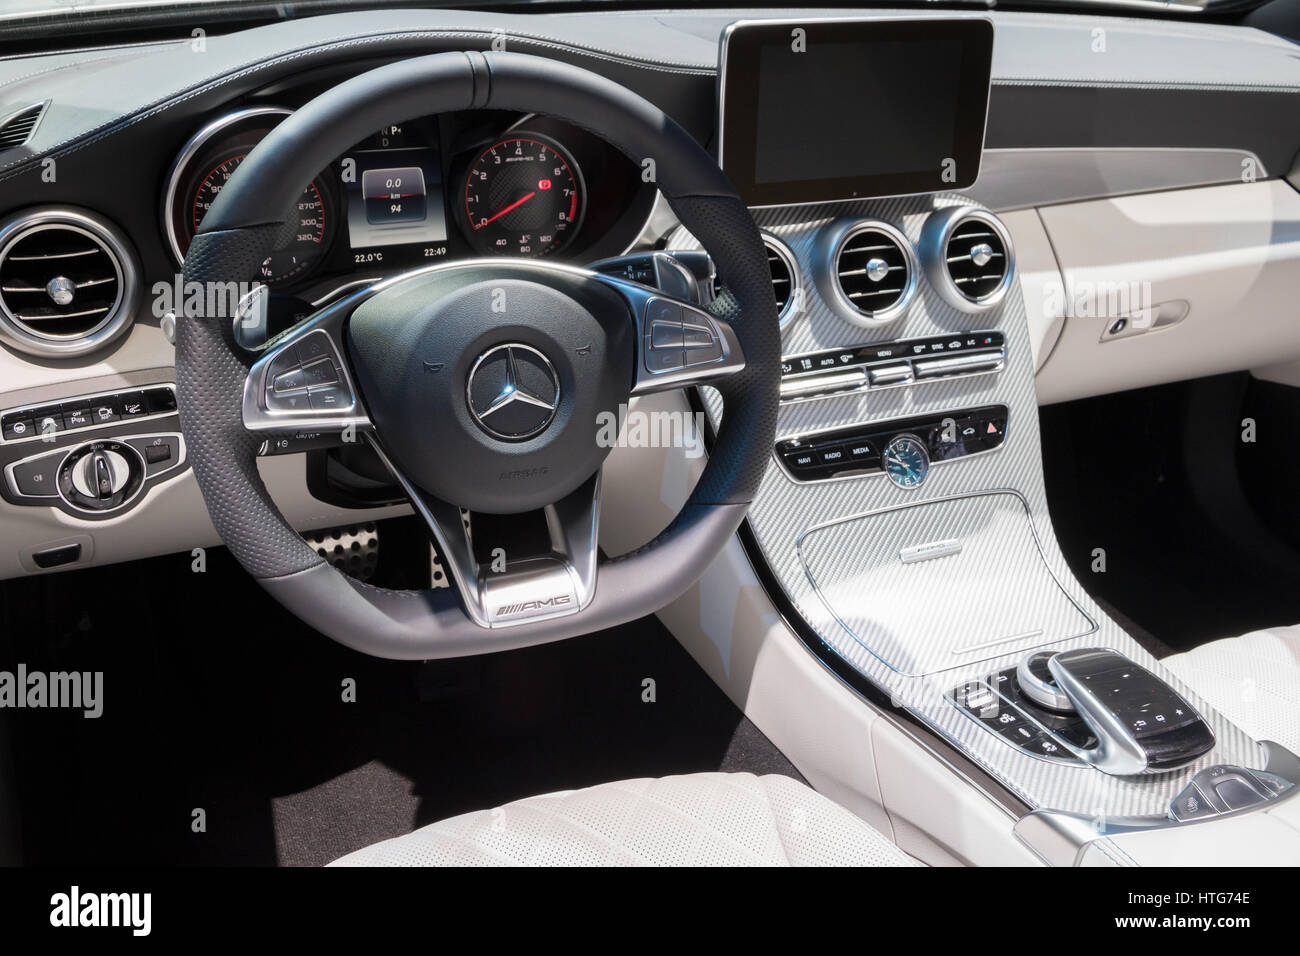 GENEVA, SWITZERLAND - MARCH 8, 2017: Mercedes AMG interior car interior presented at the 87th Geneva International Motor Show. Stock Photo